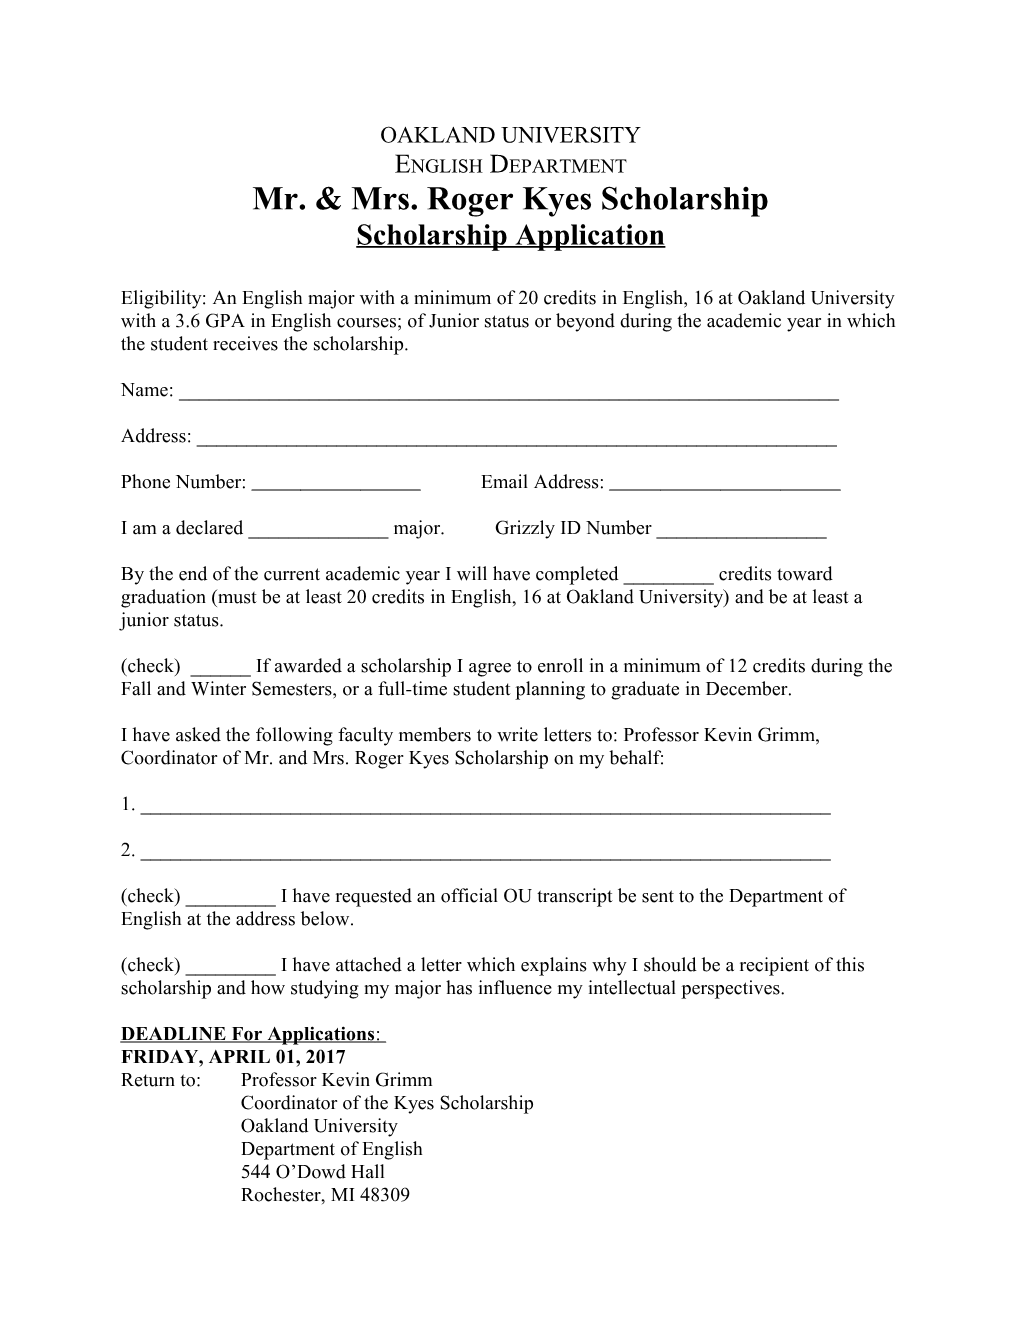 Mr. & Mrs. Roger Kyes Scholarship